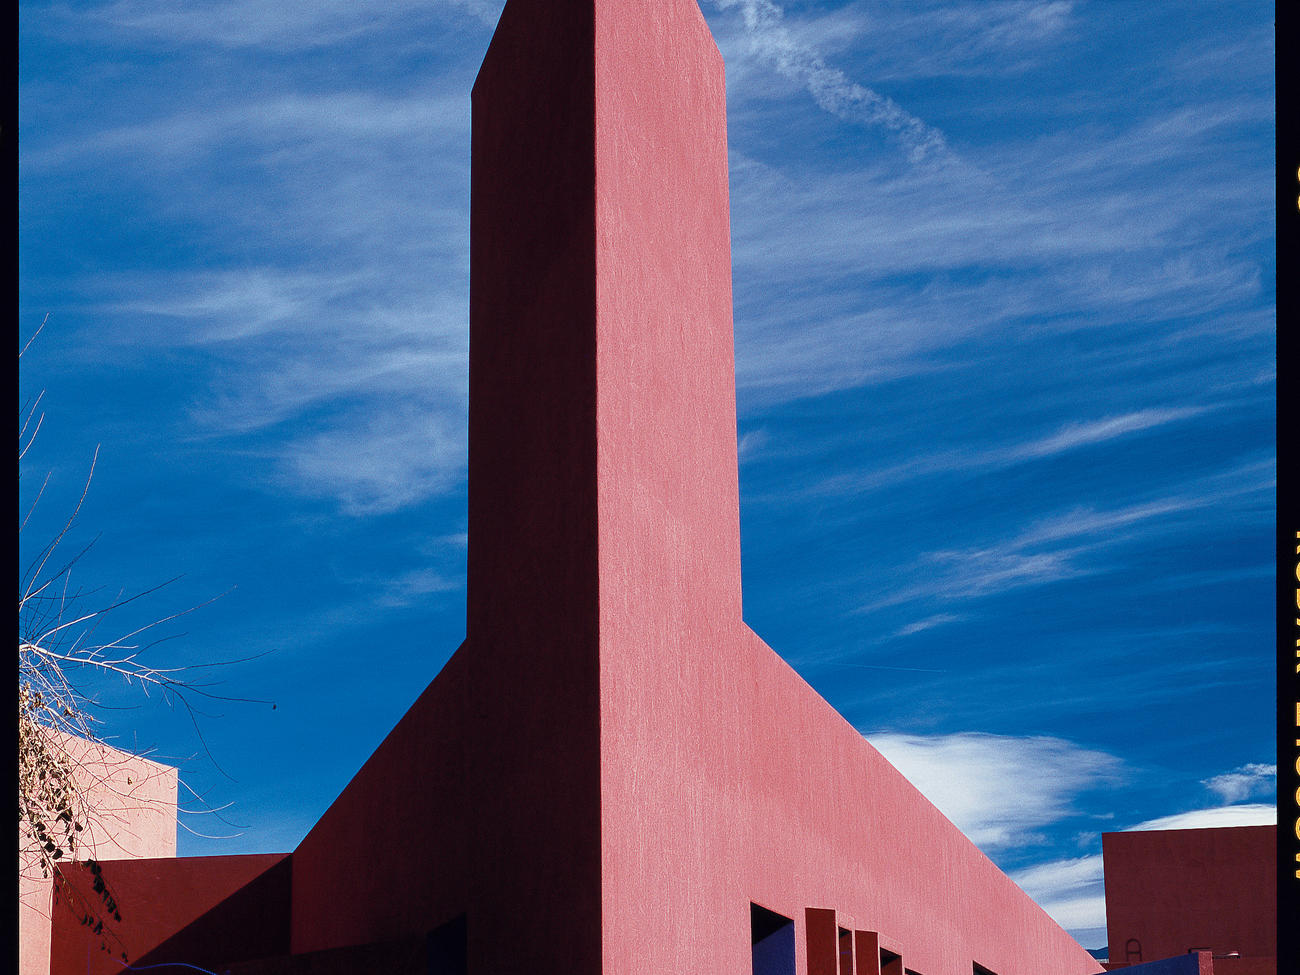 Santa Fe, New Mexico: Best Modern Architecture